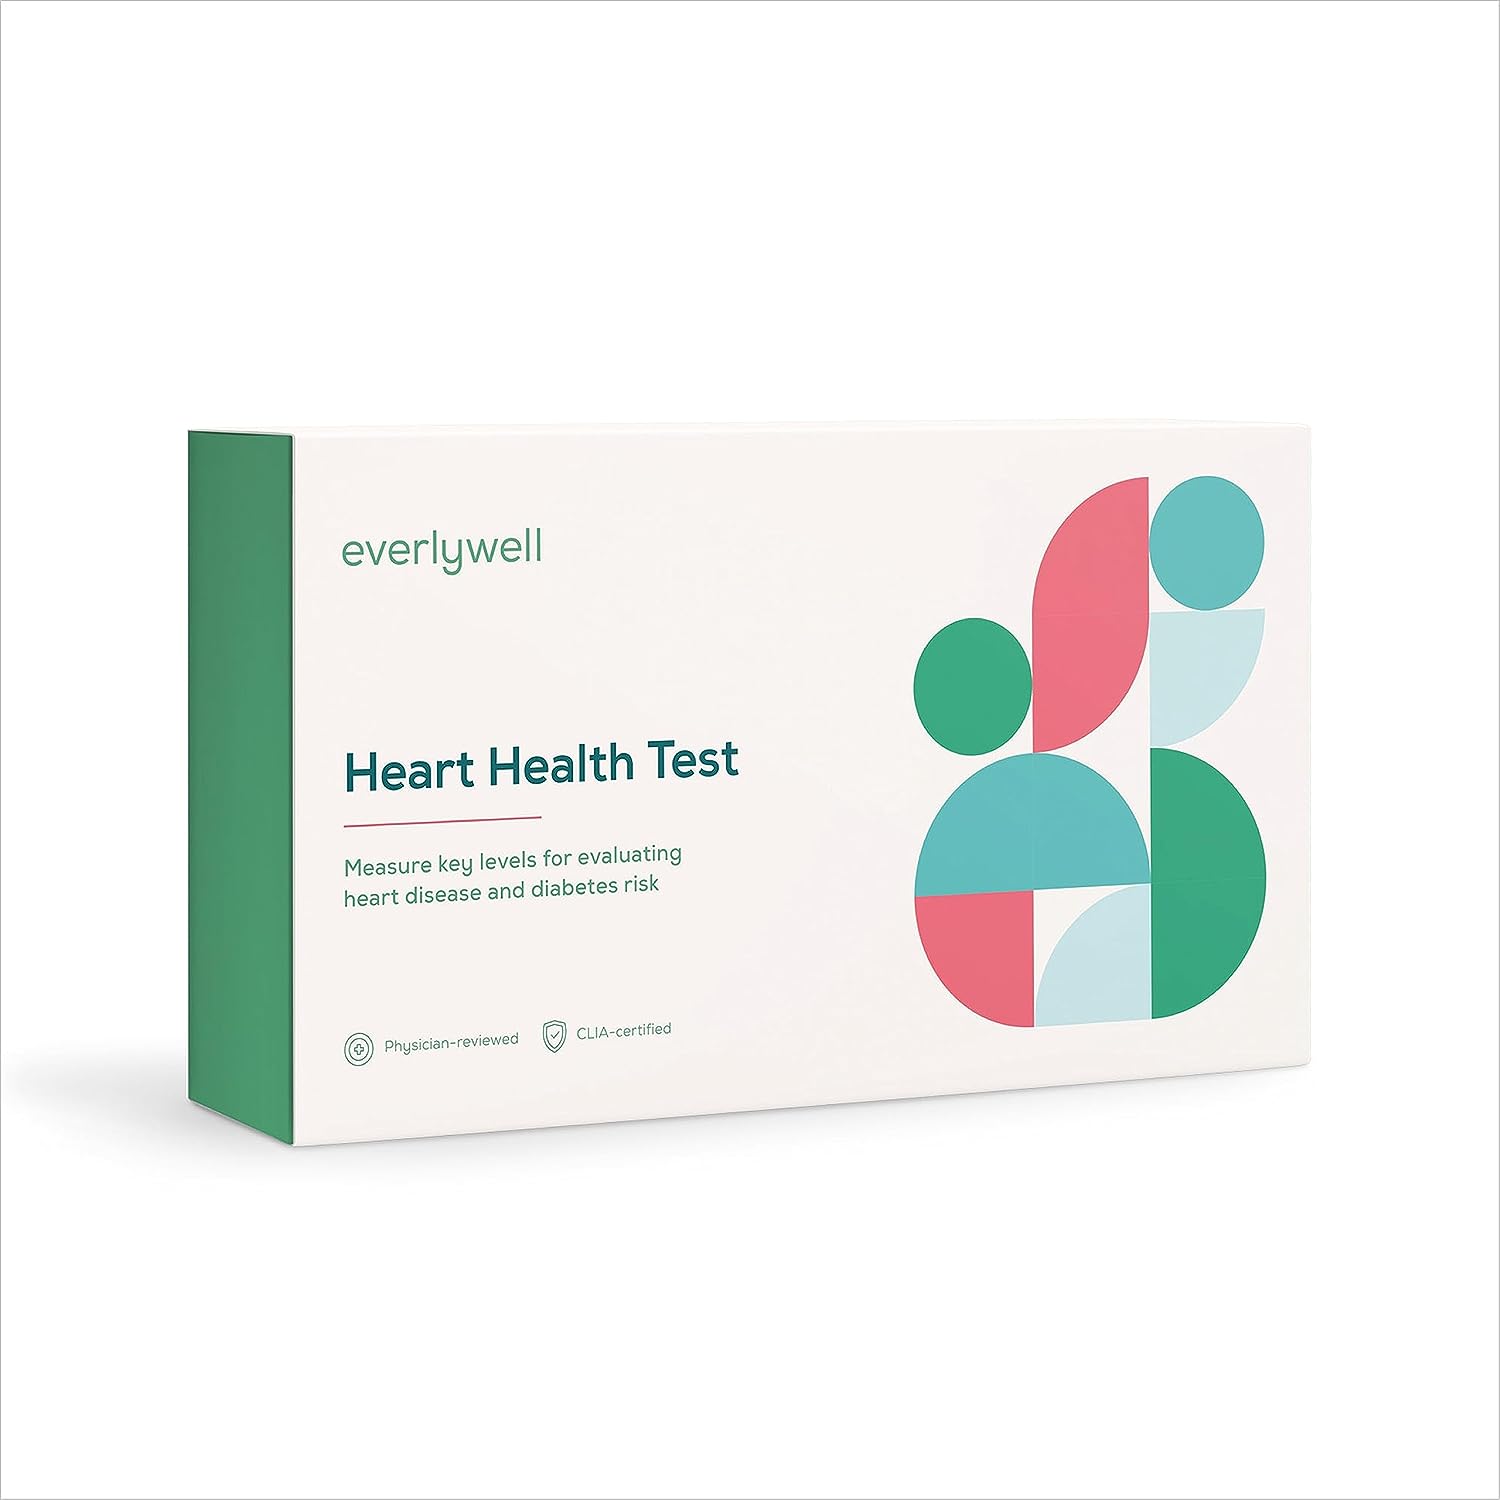 Heart Health Test